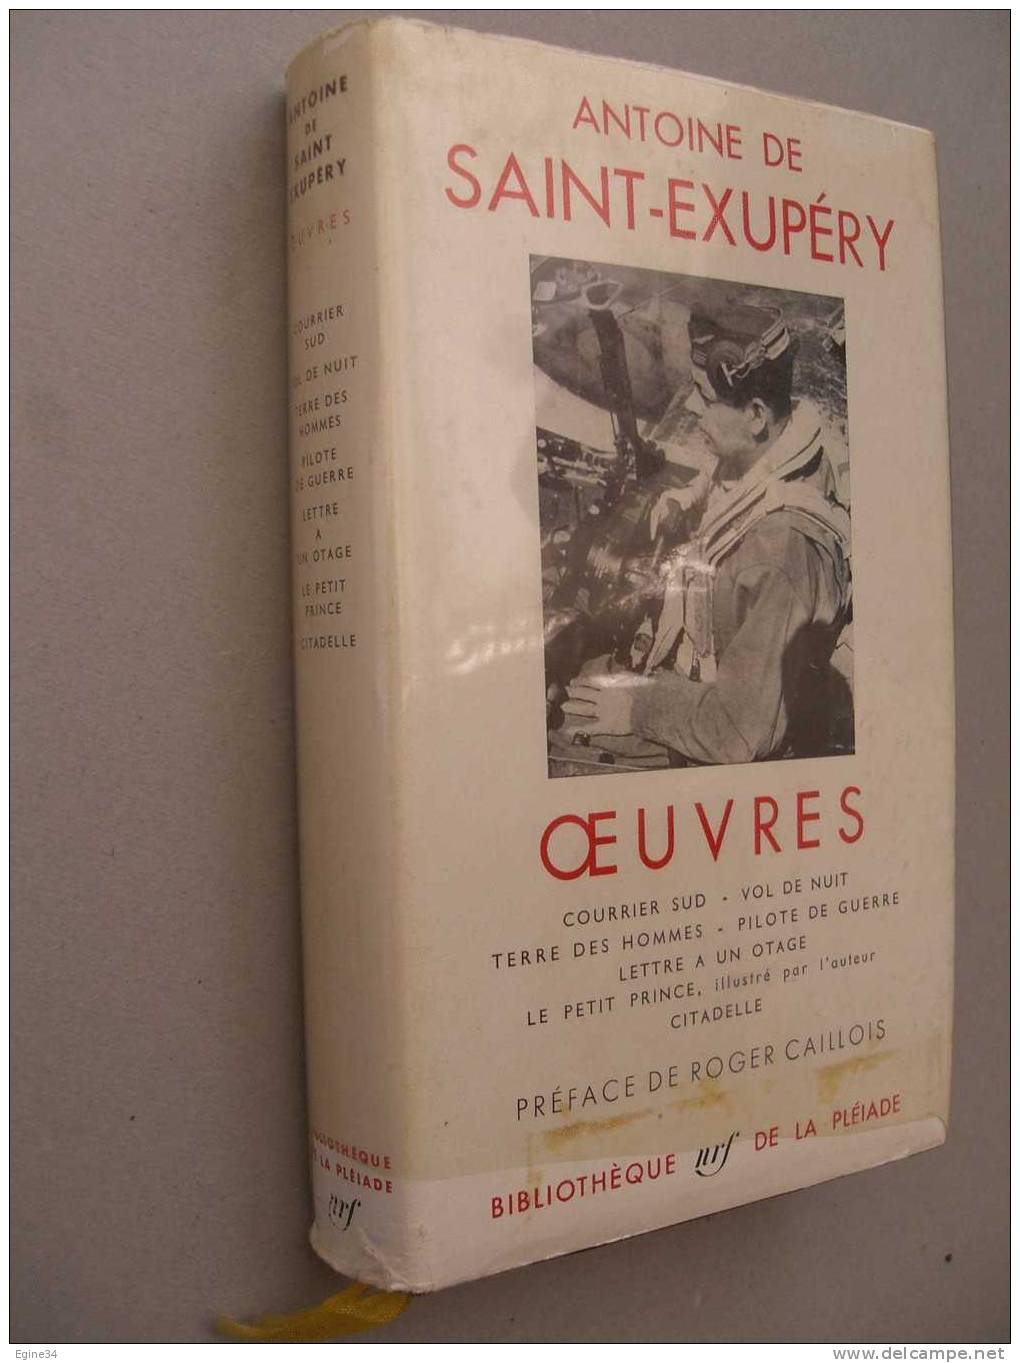 Blibliothèque De La PLEIADE No 98  -  Antoine De SAINT EXUPERY - Oeuvres -1959- Illustrations Du Petit Prince - La Pleyade